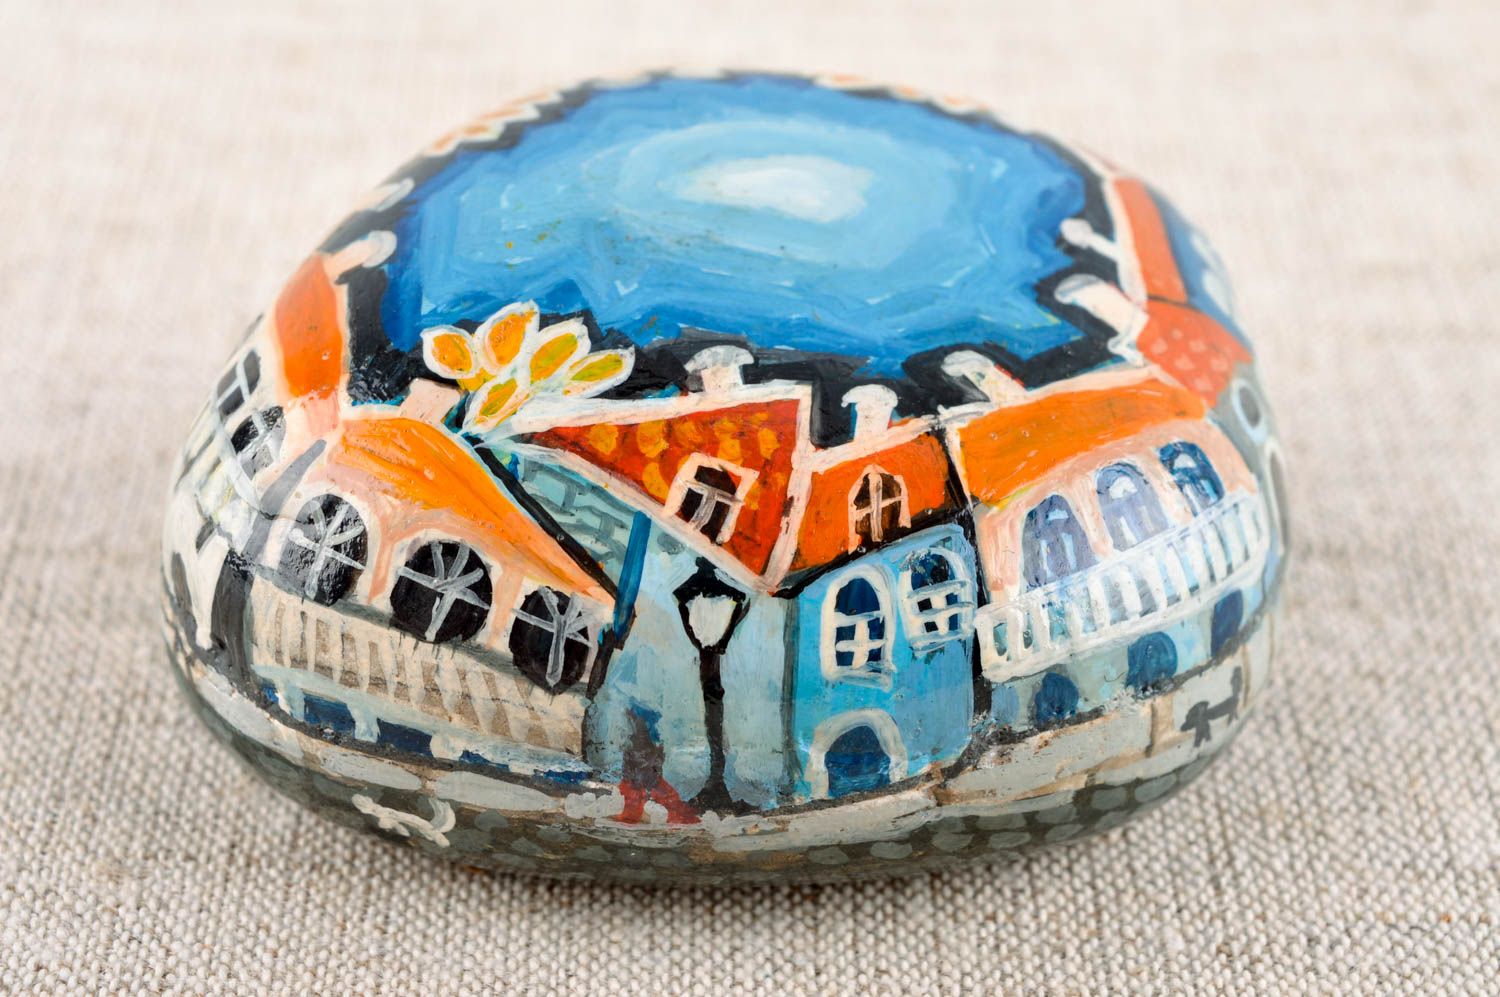 Unusual handmade painted pebbles sea stone painting home decoration gift ideas photo 1